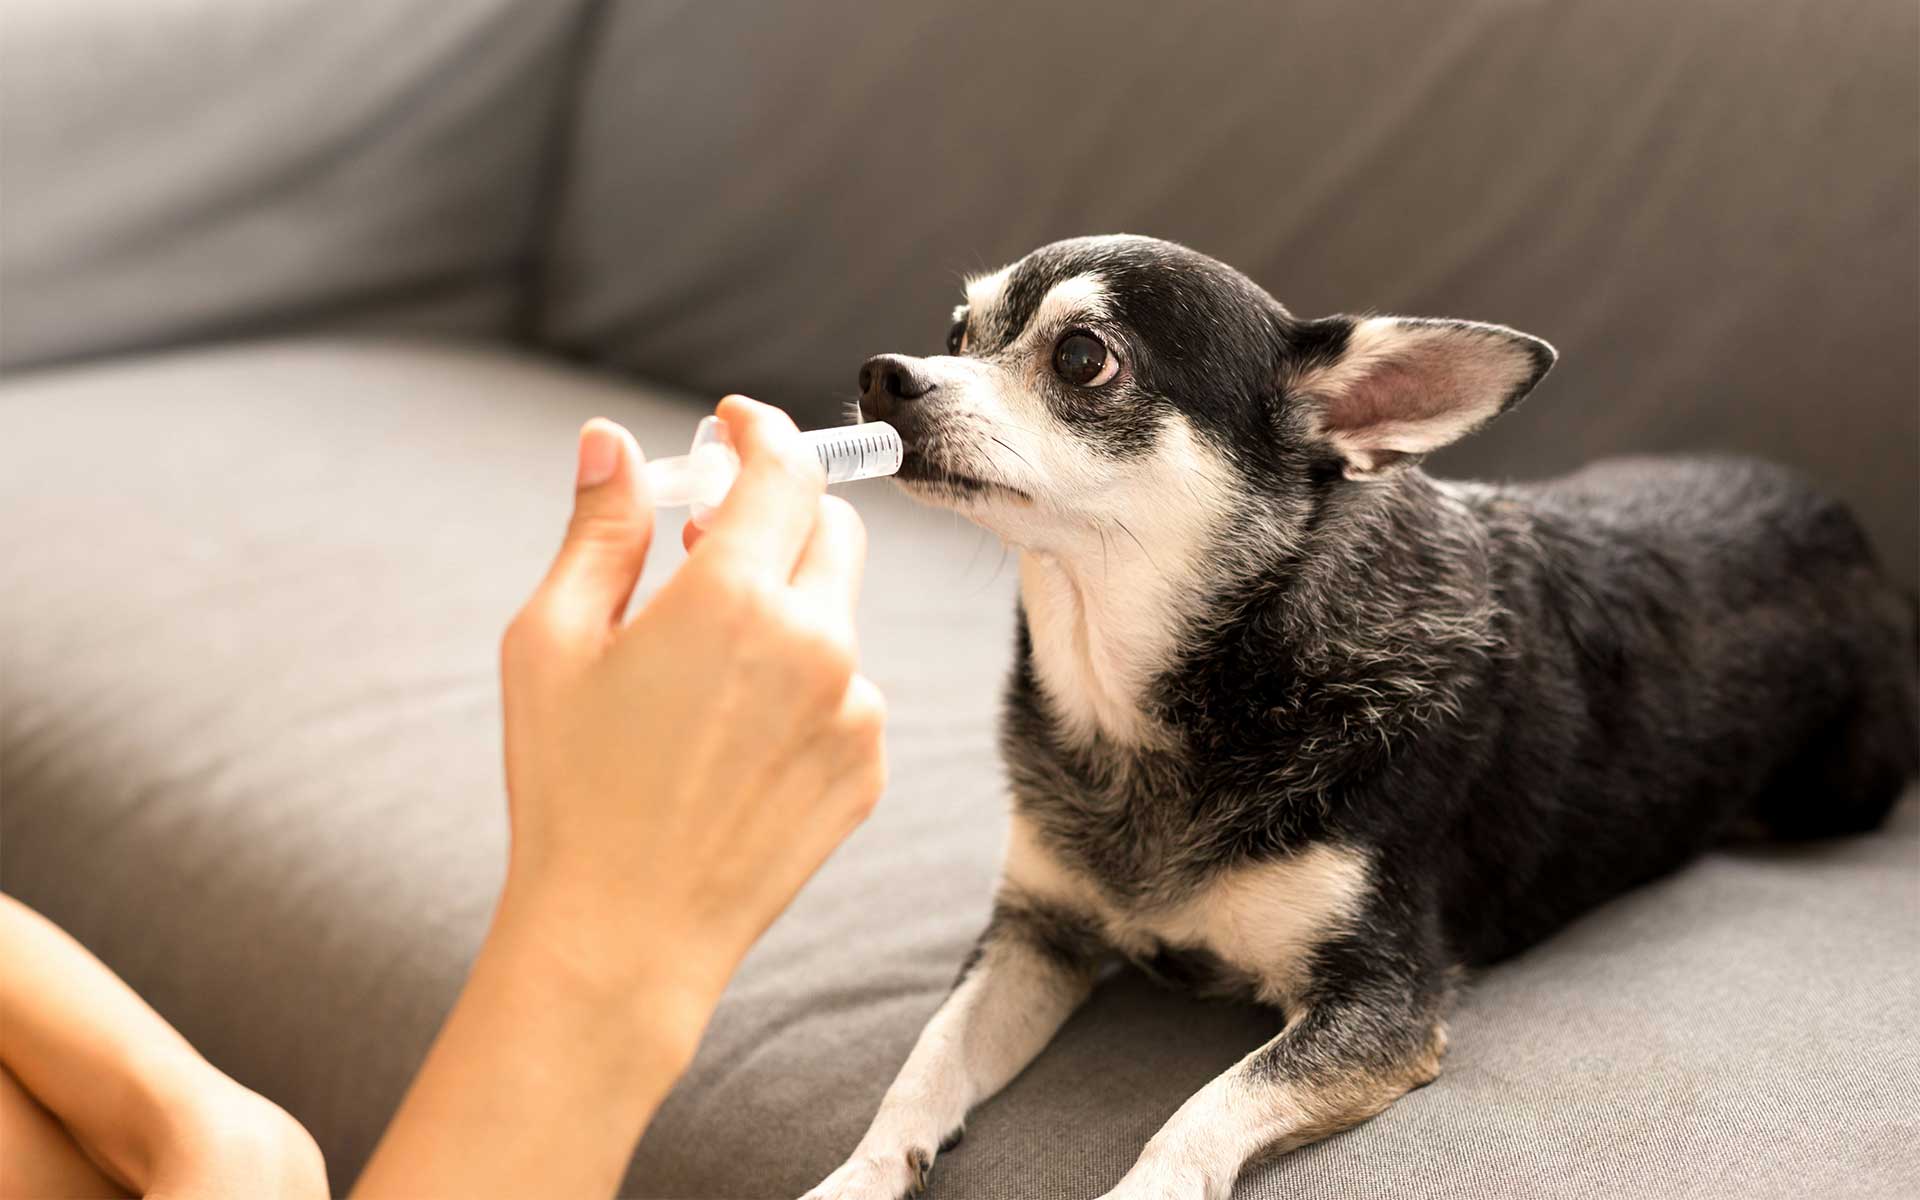 Chihuahua getting medication